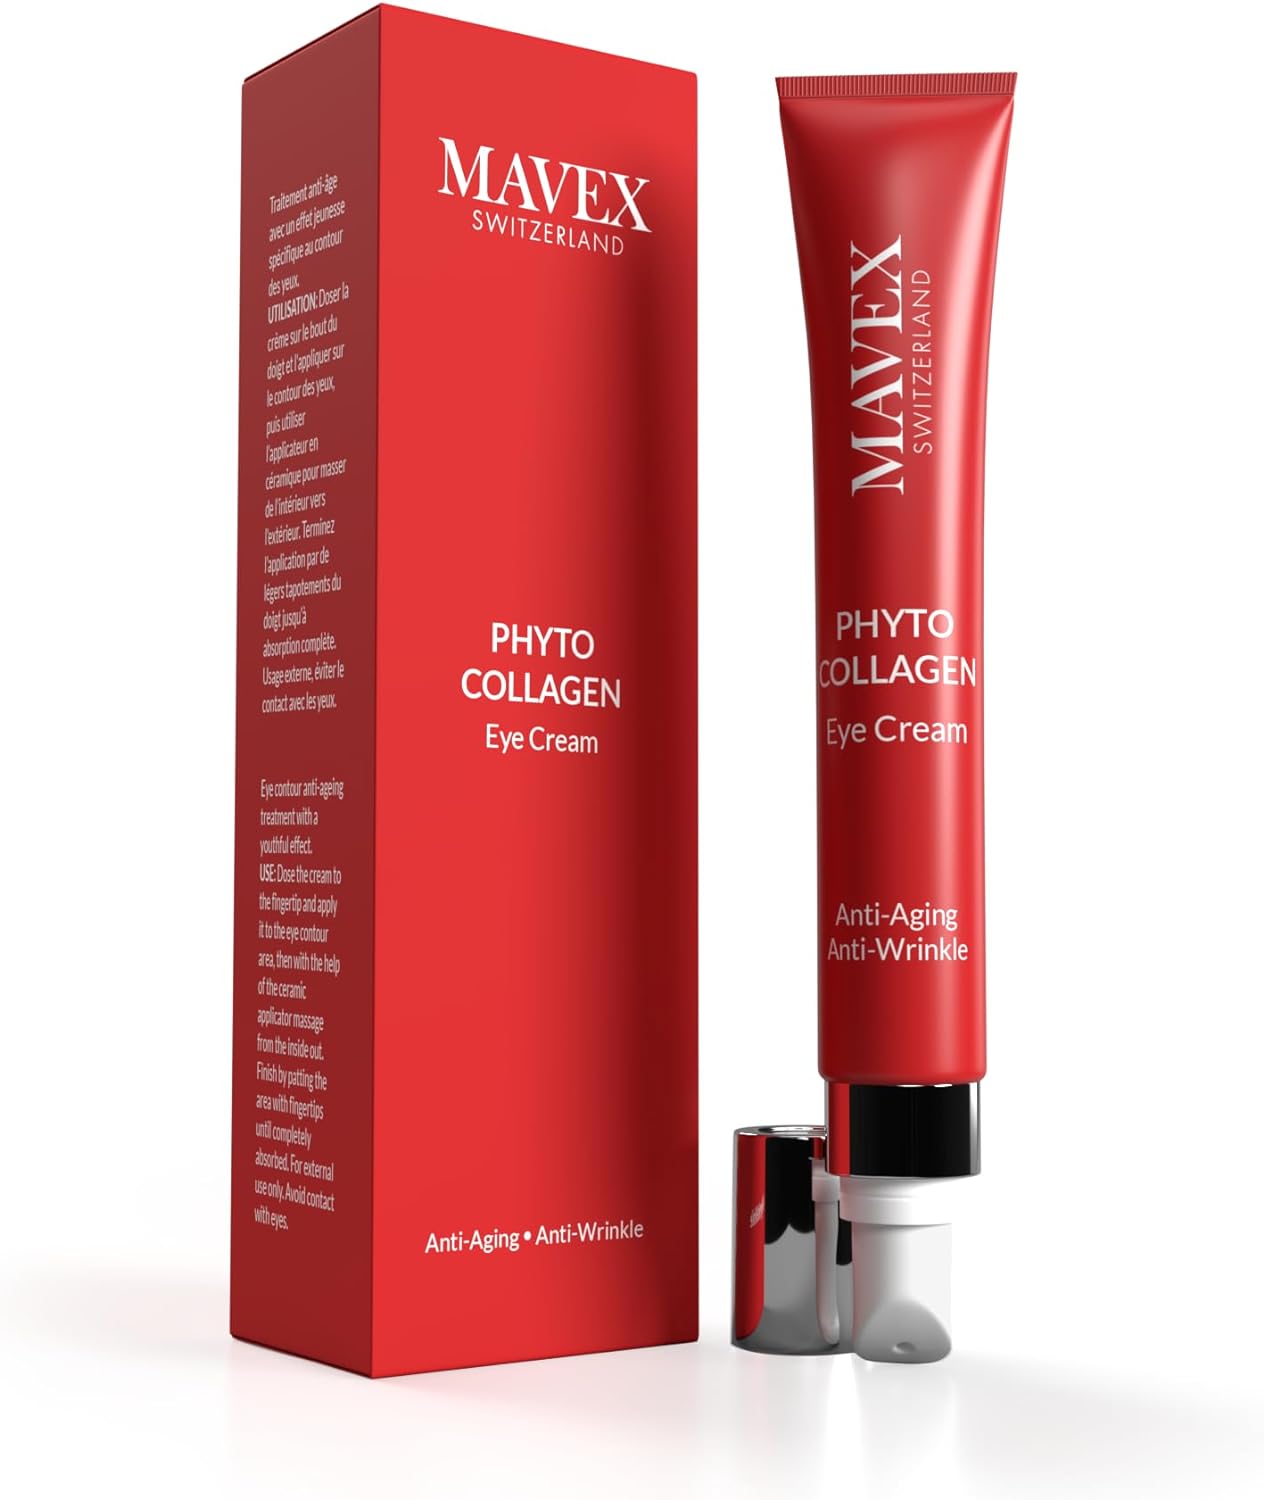 MAVEX PHITO COLLAGEN Eye Cream 20ml Anti-aging